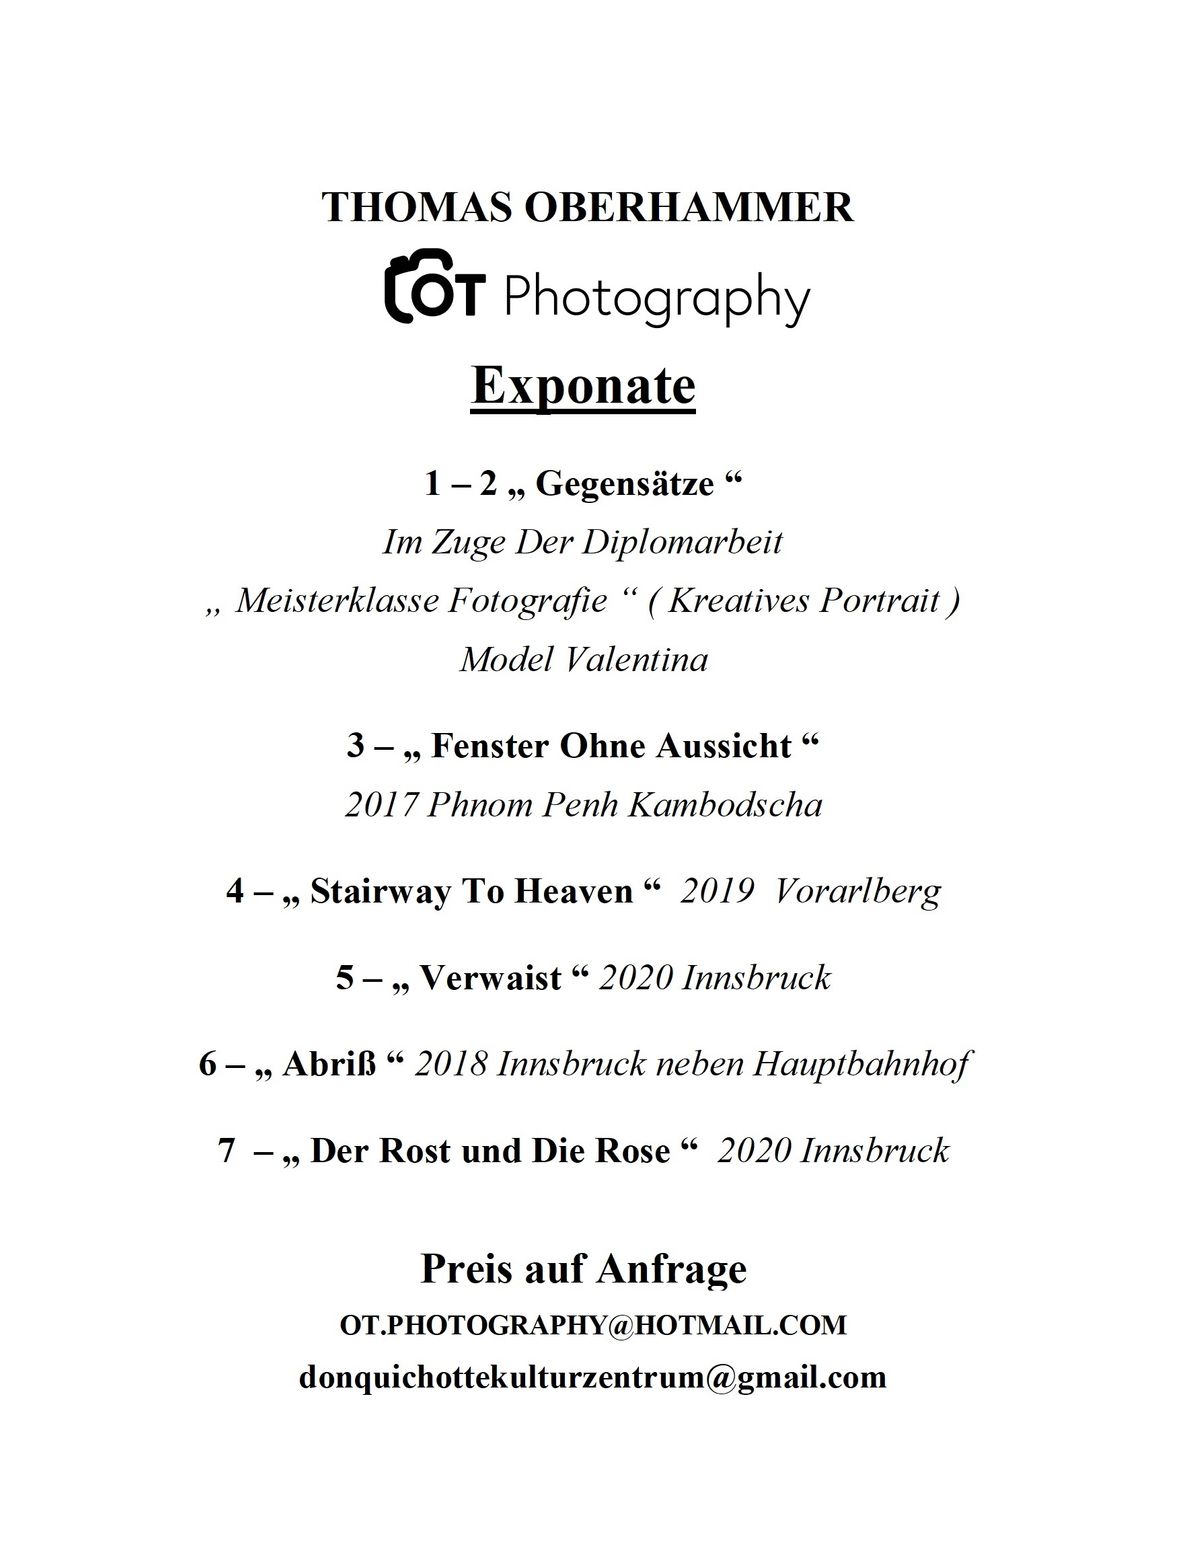 Thomas Oberhammer EXPONATE 2021 Februar Don Quichotte